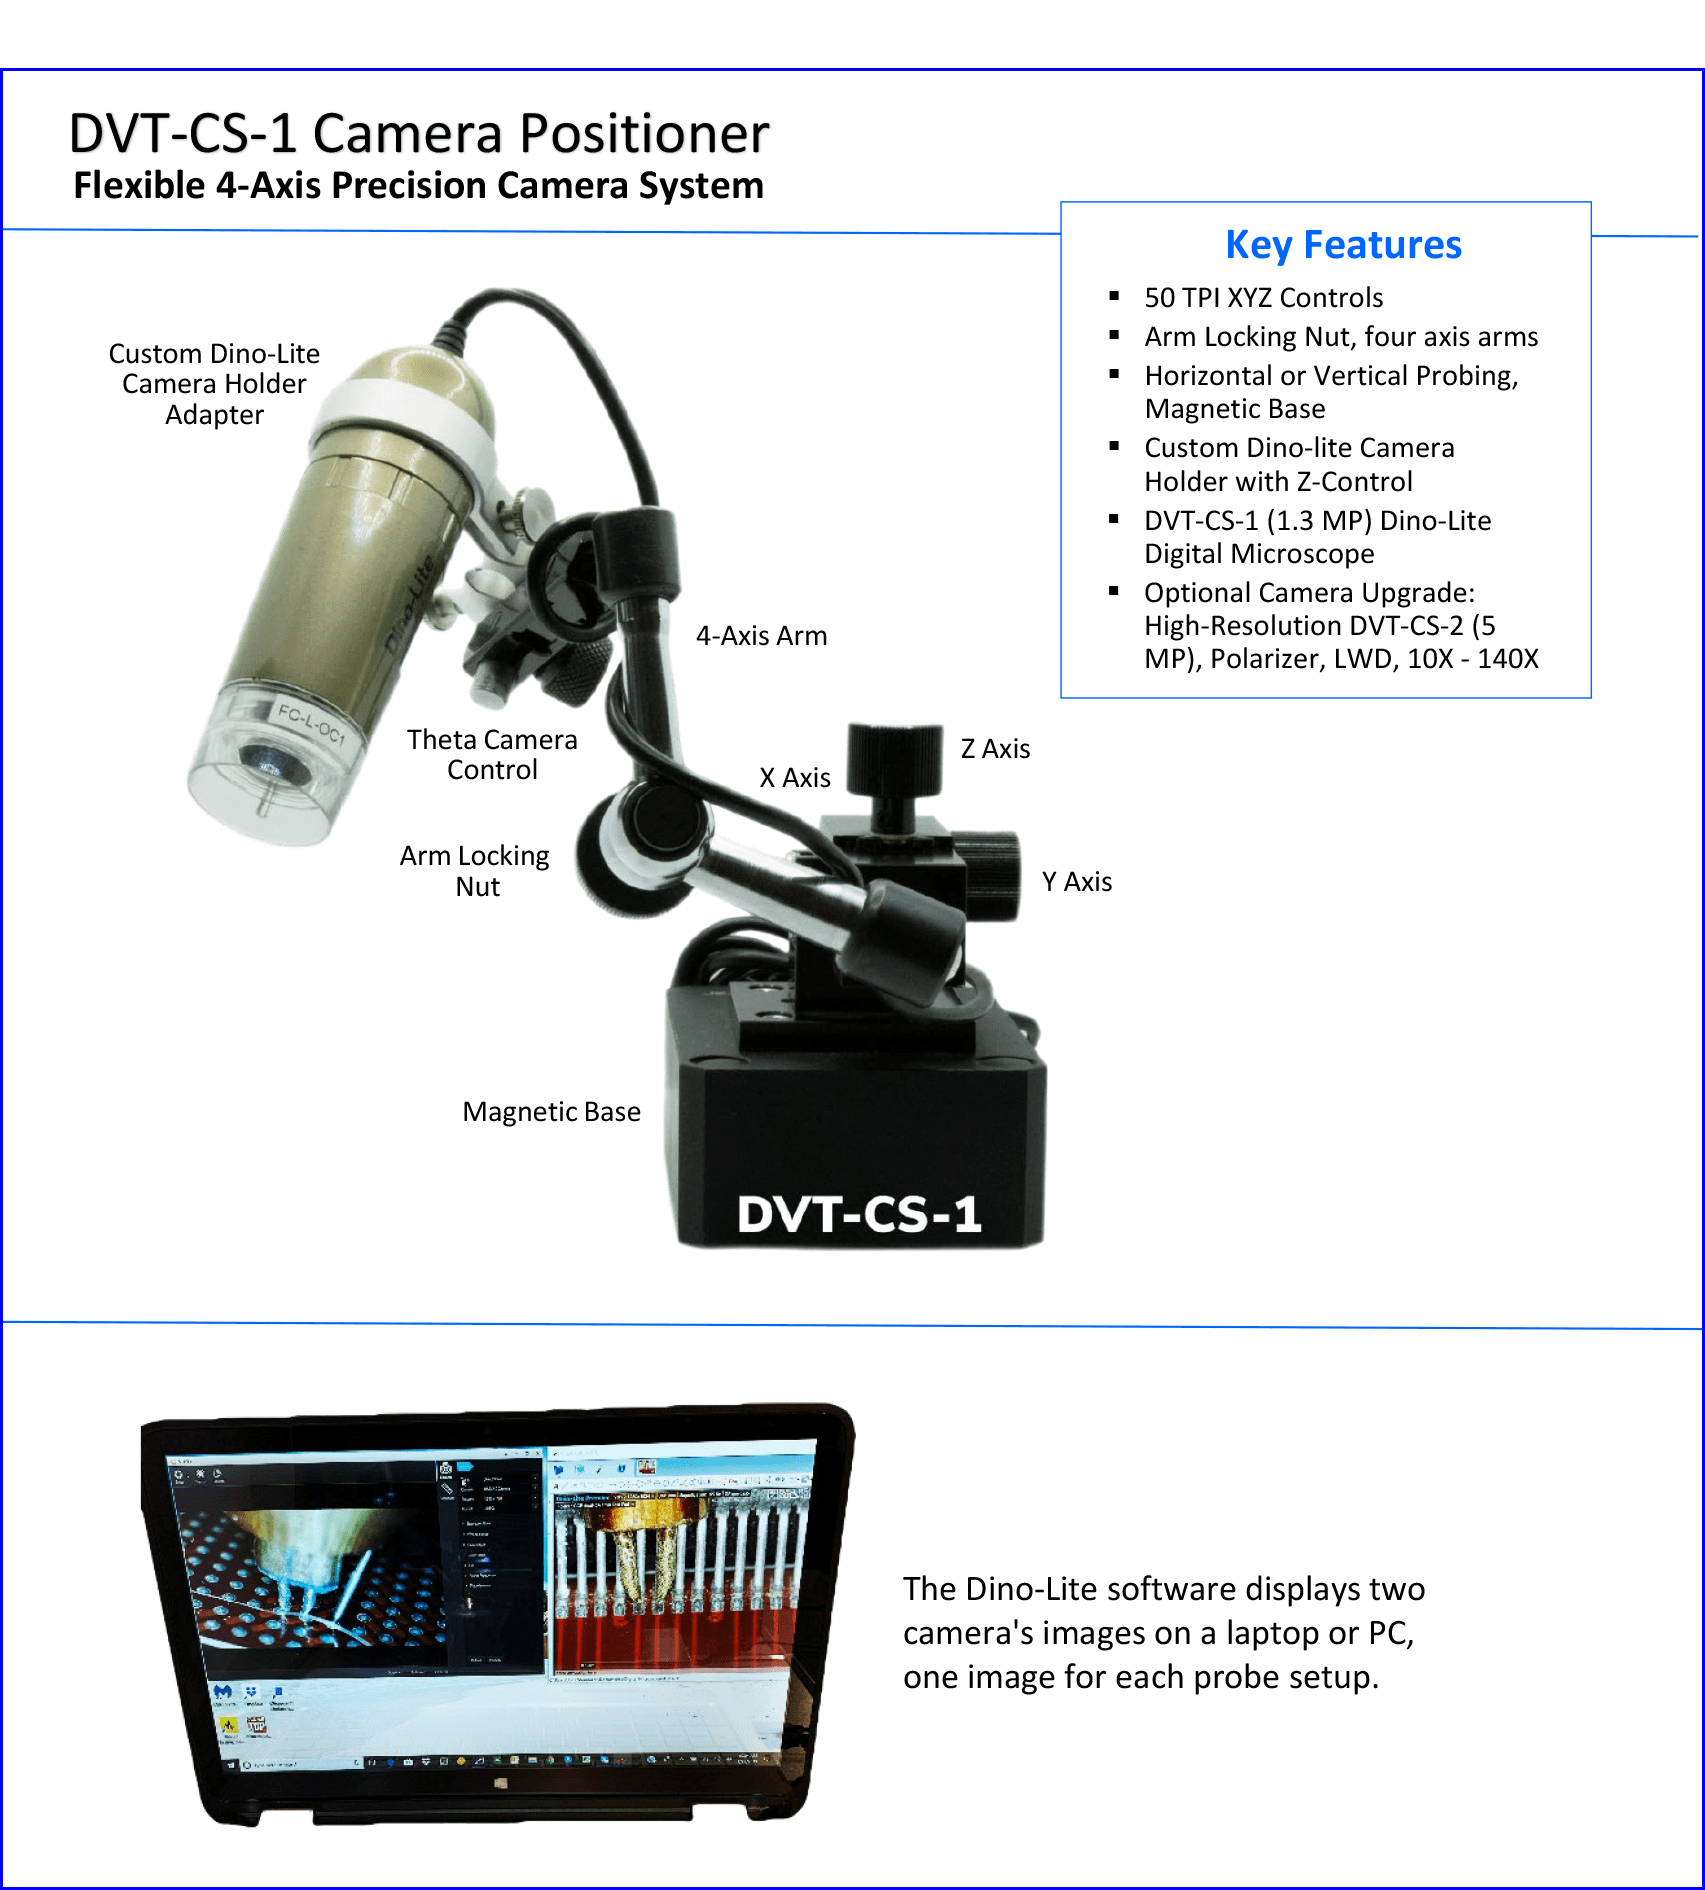 Shows image of the DVT-CS-1 Camera Positioner datasheet.